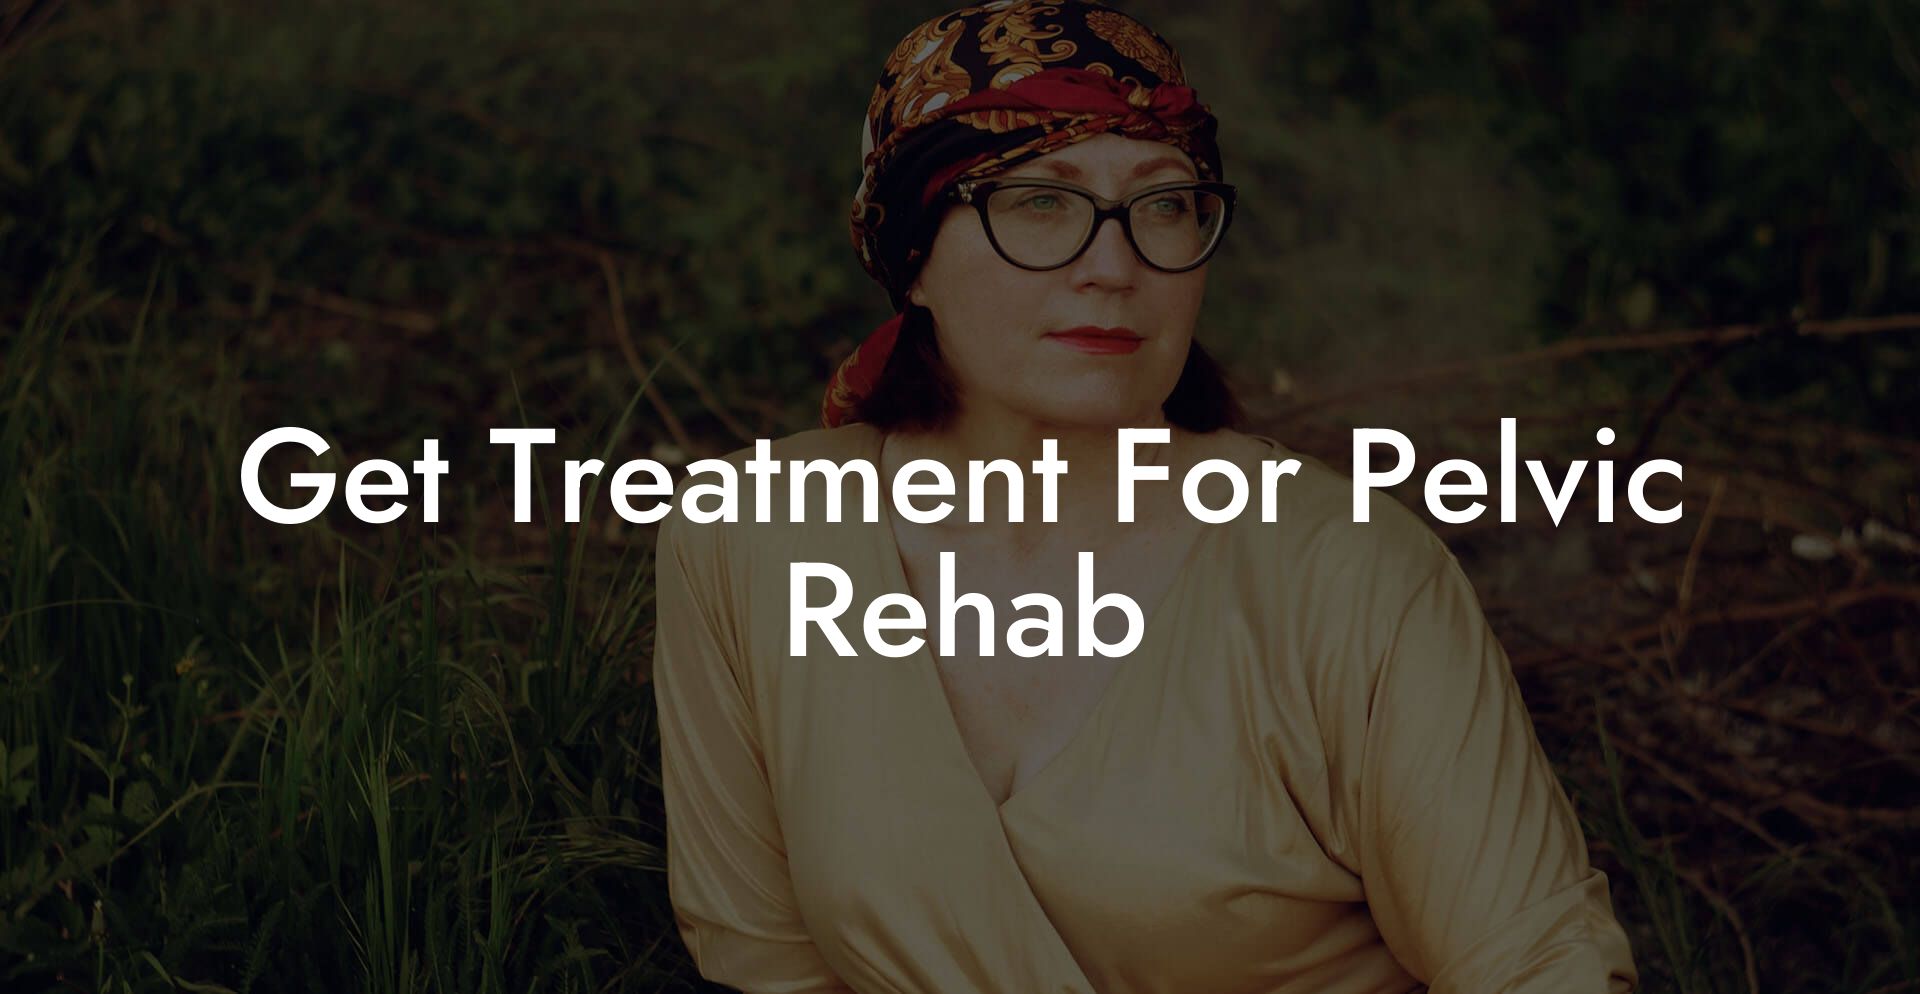 Get Treatment For Pelvic Rehab